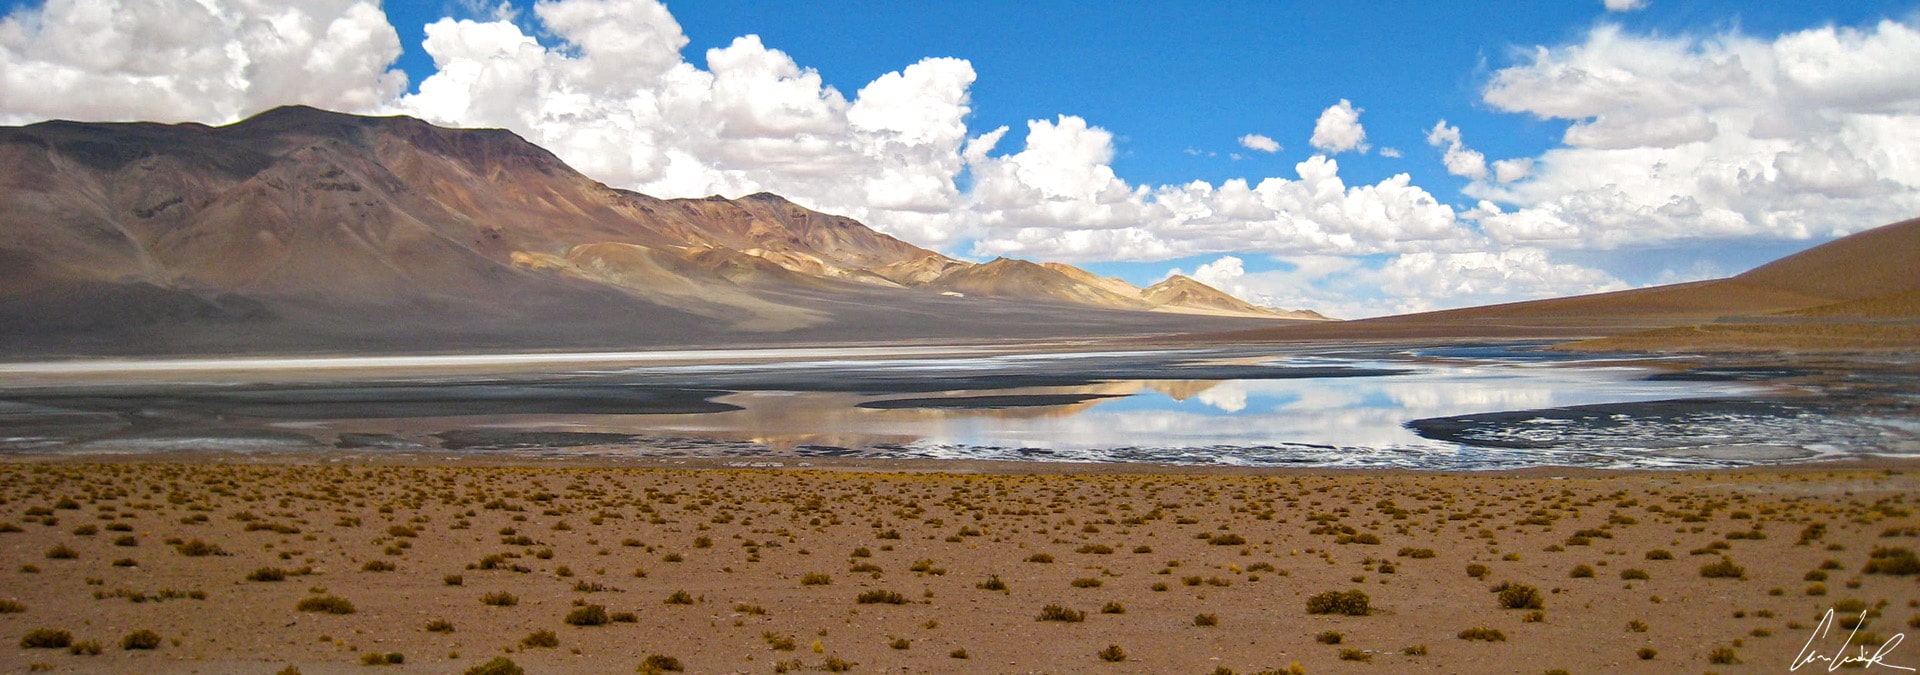 Geyser del Tatio: un chaud-froid dans le désert de l’Atacama